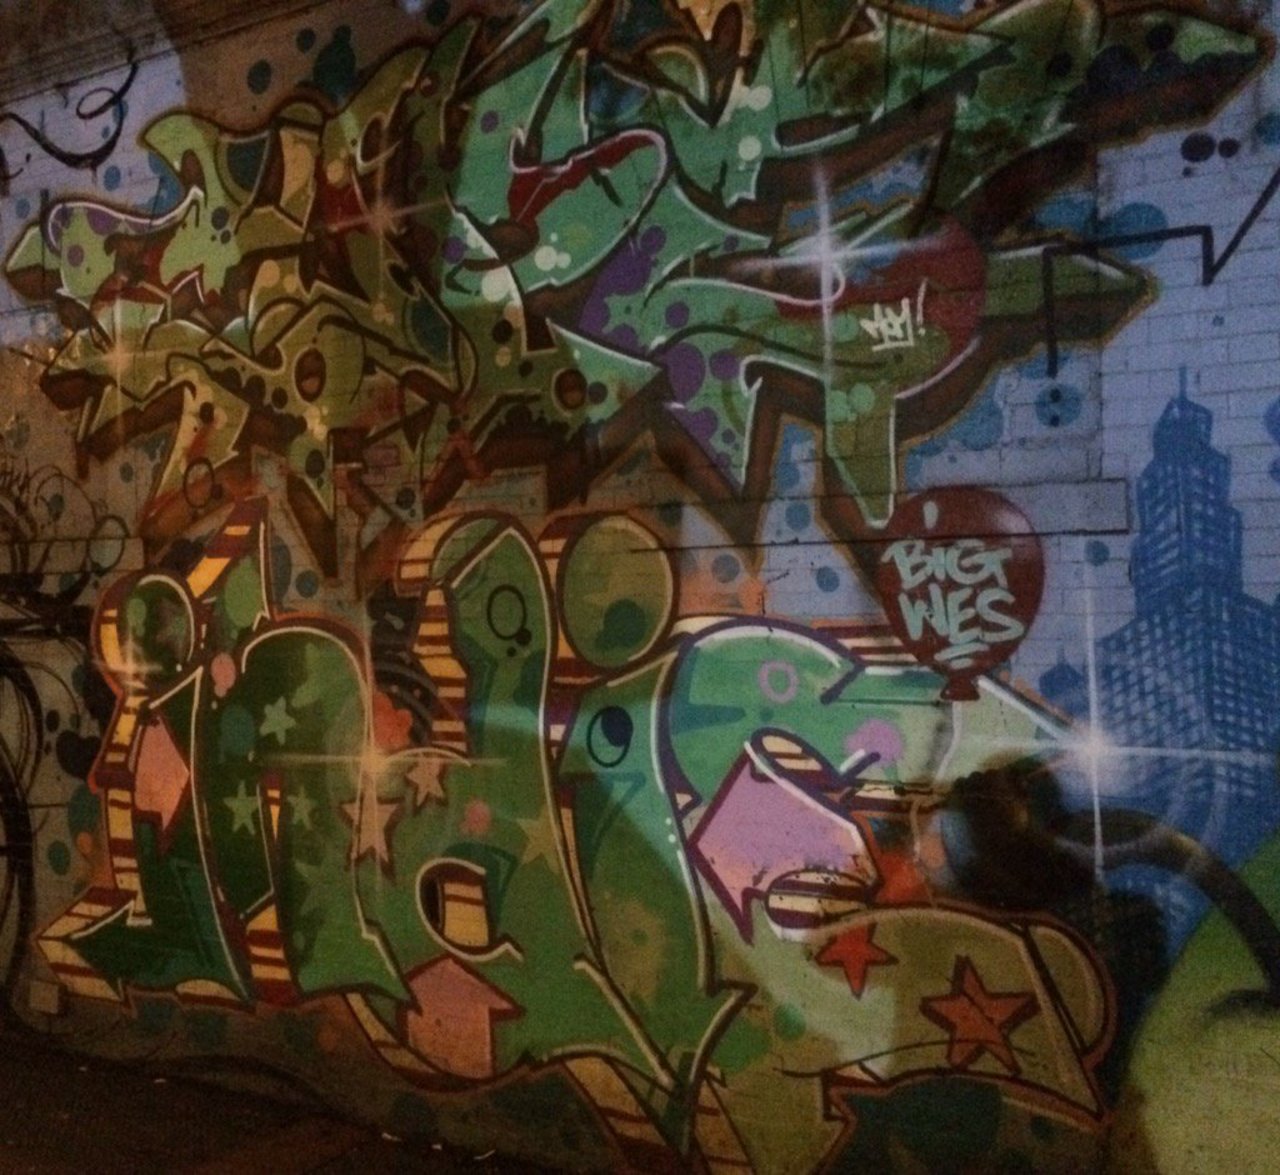 Little late night @MRCOPE2 @Indie184 mural in the Bronx #graffiti #art #streetart #bronx #nyc #cope2 #indie184 https://t.co/BDAmzZt3EX